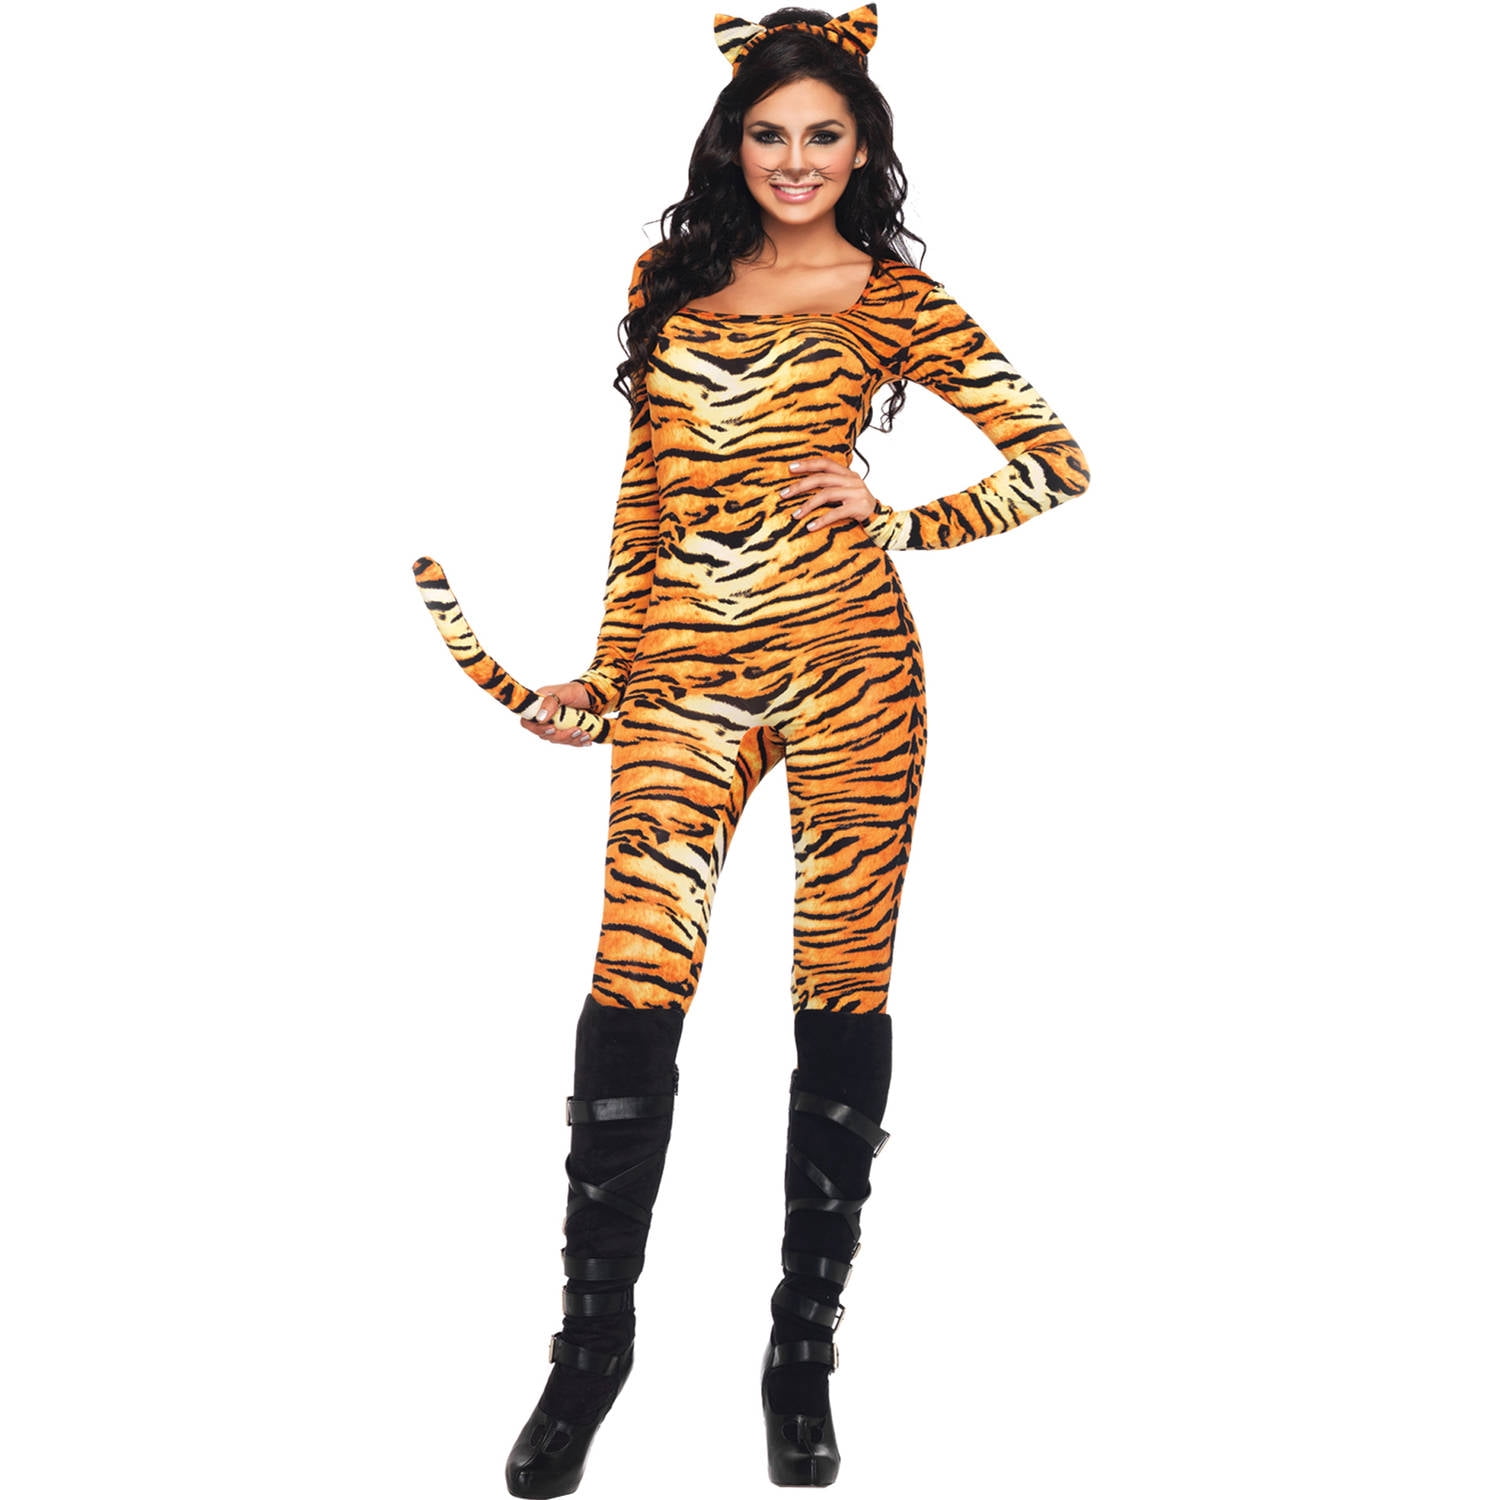 Leg Avenue Women's Wild Tiger Sexy Catsuit Costume - Walmart.com